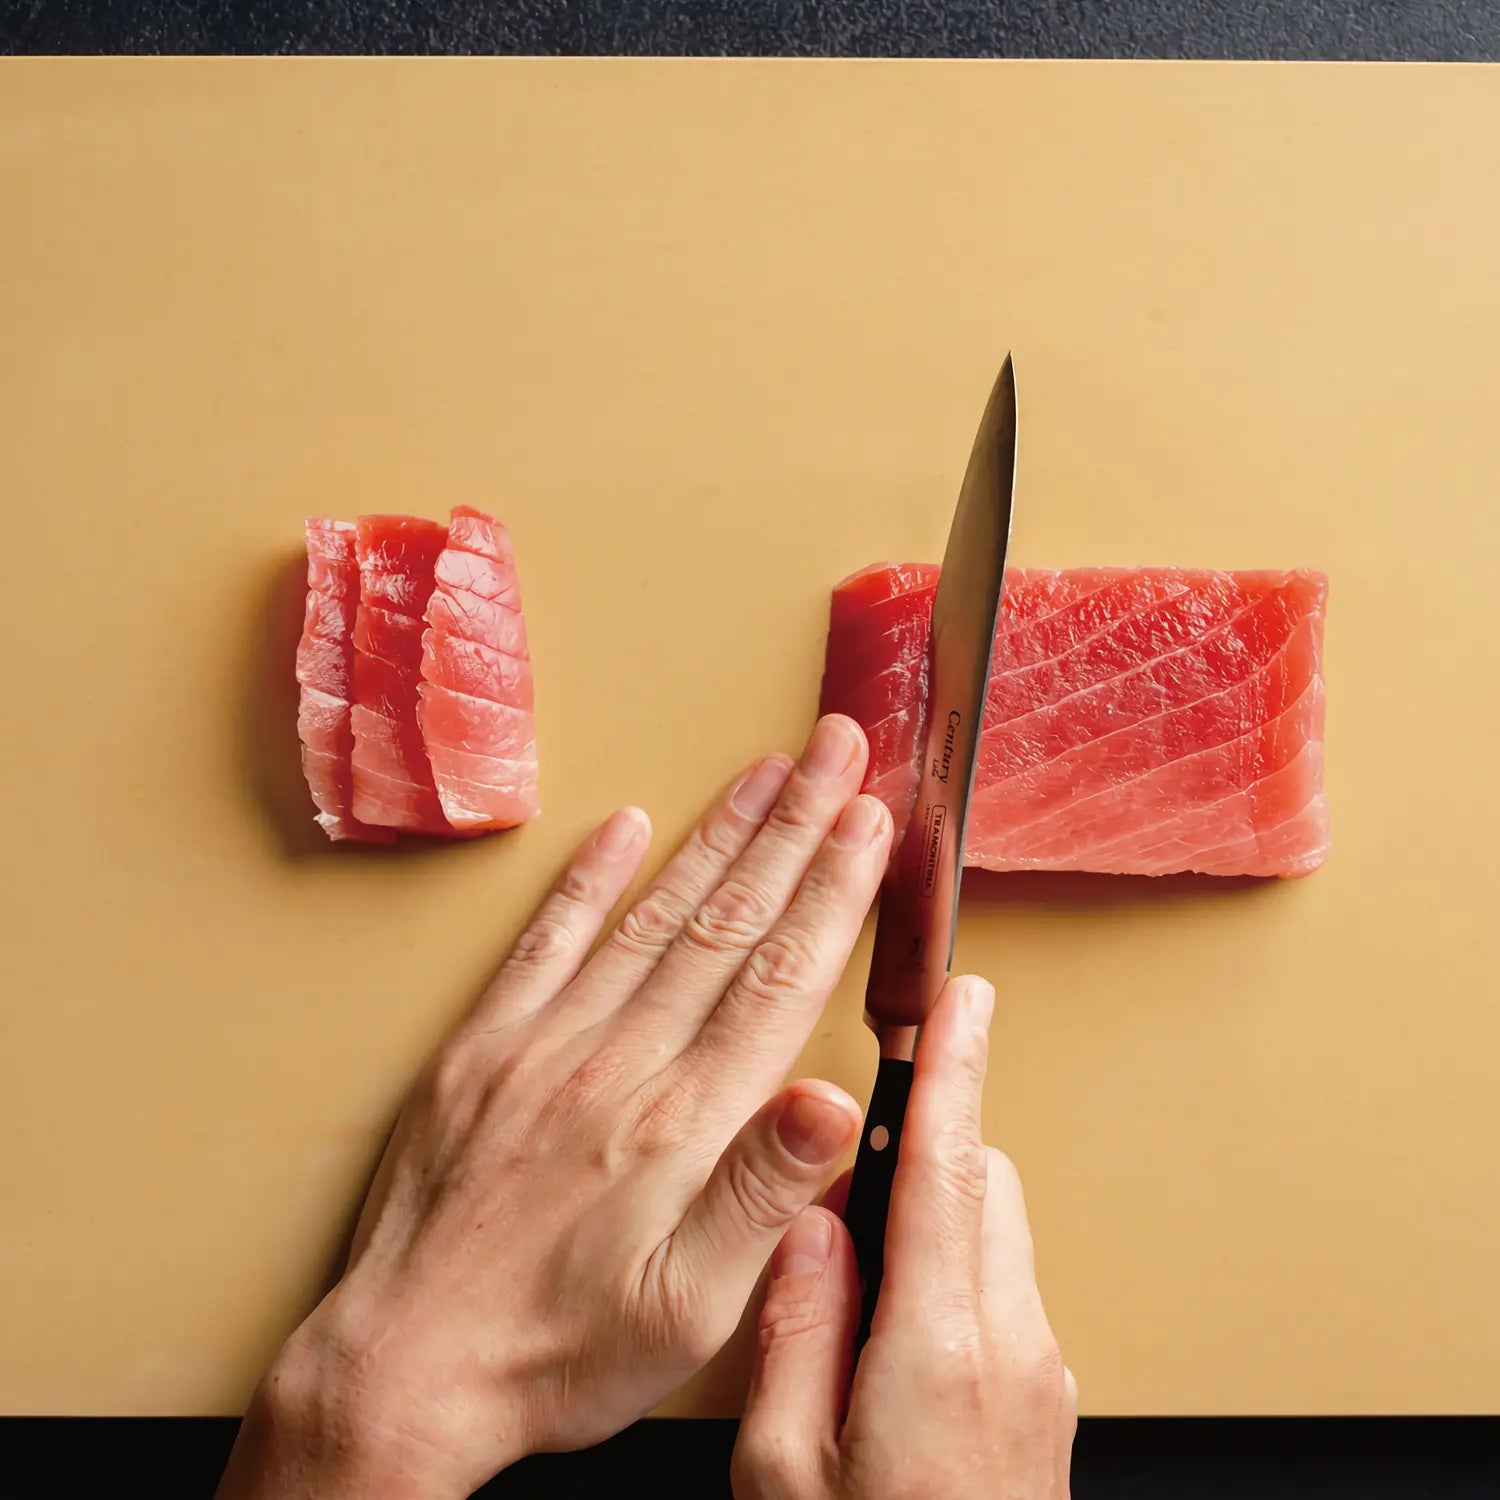 Parker Asahi Professional cutting board Cookin'Cut 50x33x1,5 102